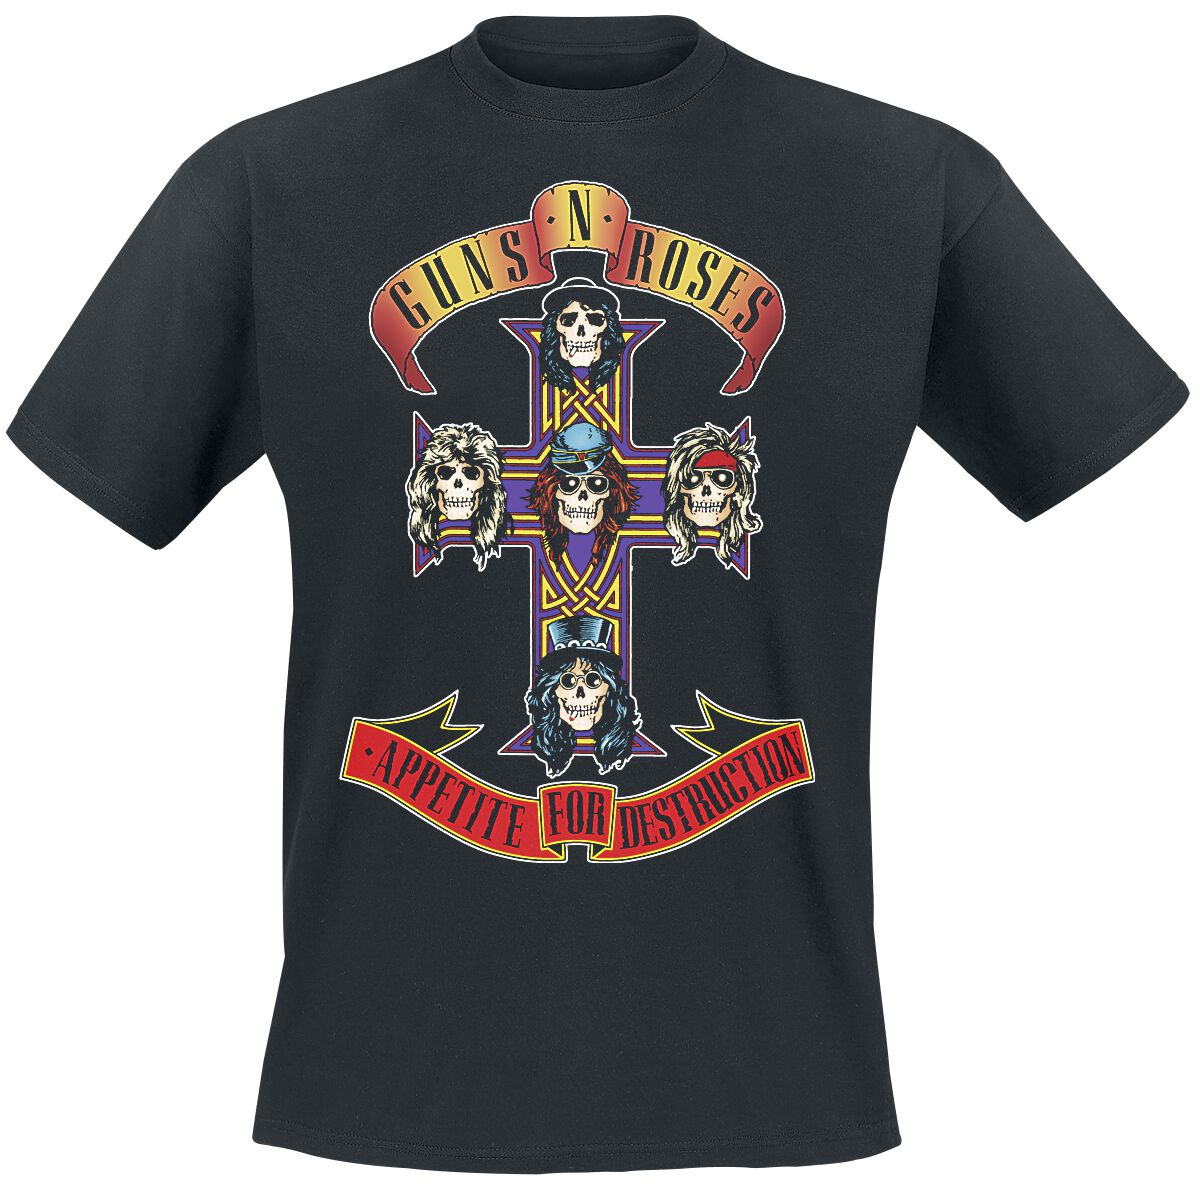 Guns N` Roses T-Shirt - Appetite For Destruction - Cover - S bis 4XL - für Männer - Größe 3XL - schwarz  - Lizenziertes Merchandise!